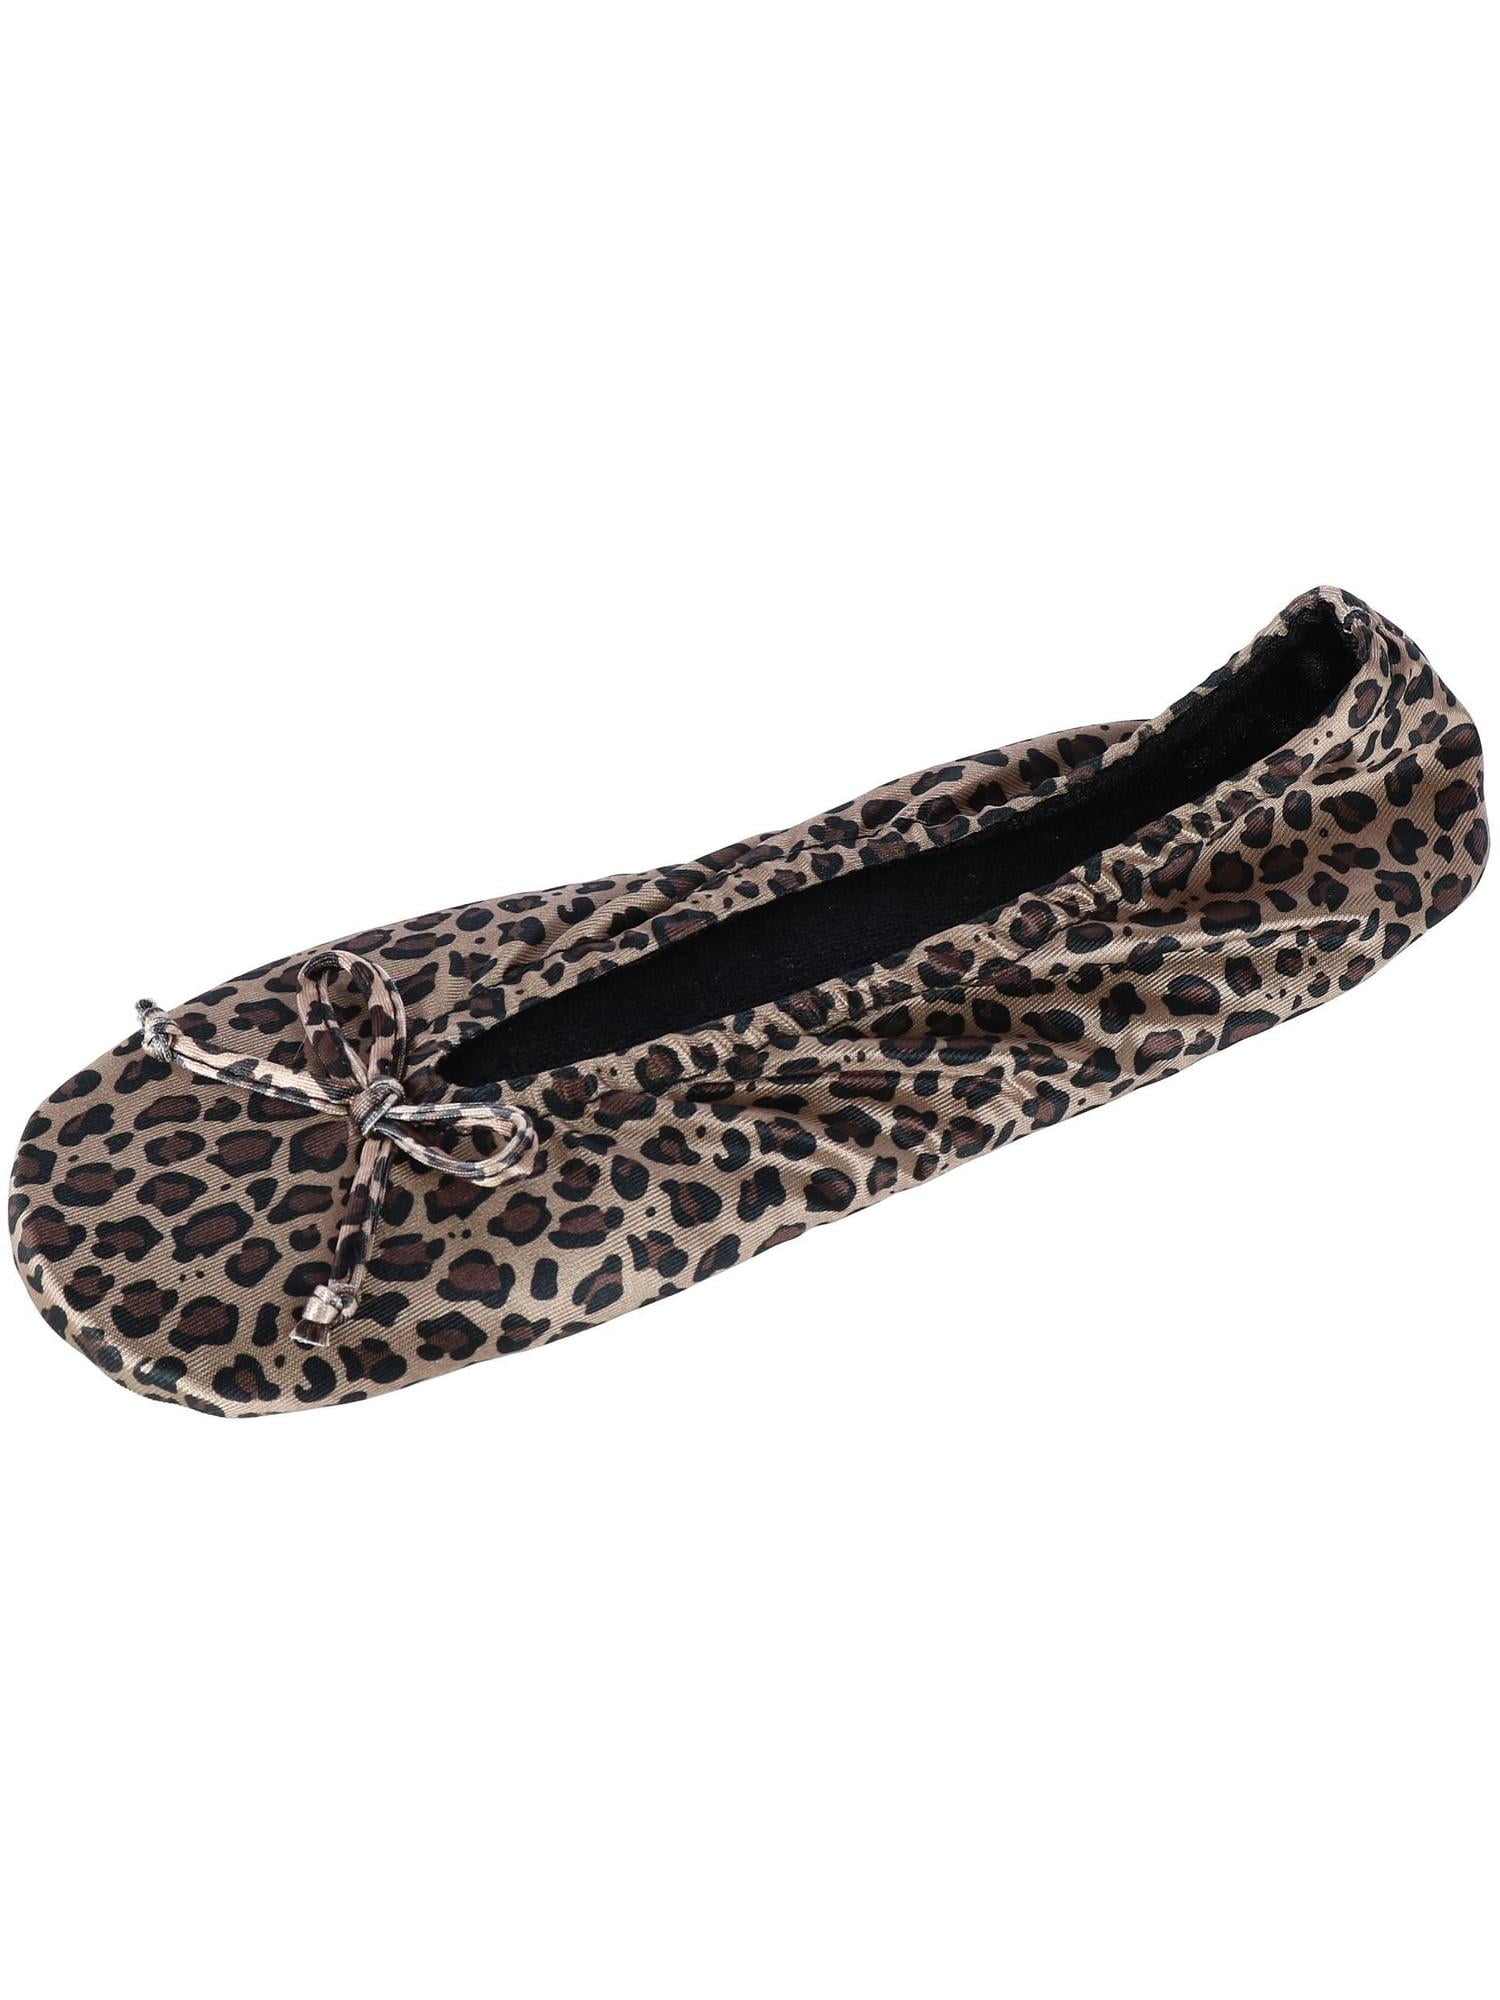 Ladies Plush Cuddly SOFT Leopard Print Non Skid Ballet Slippers Bow S/M 2 PAIR 